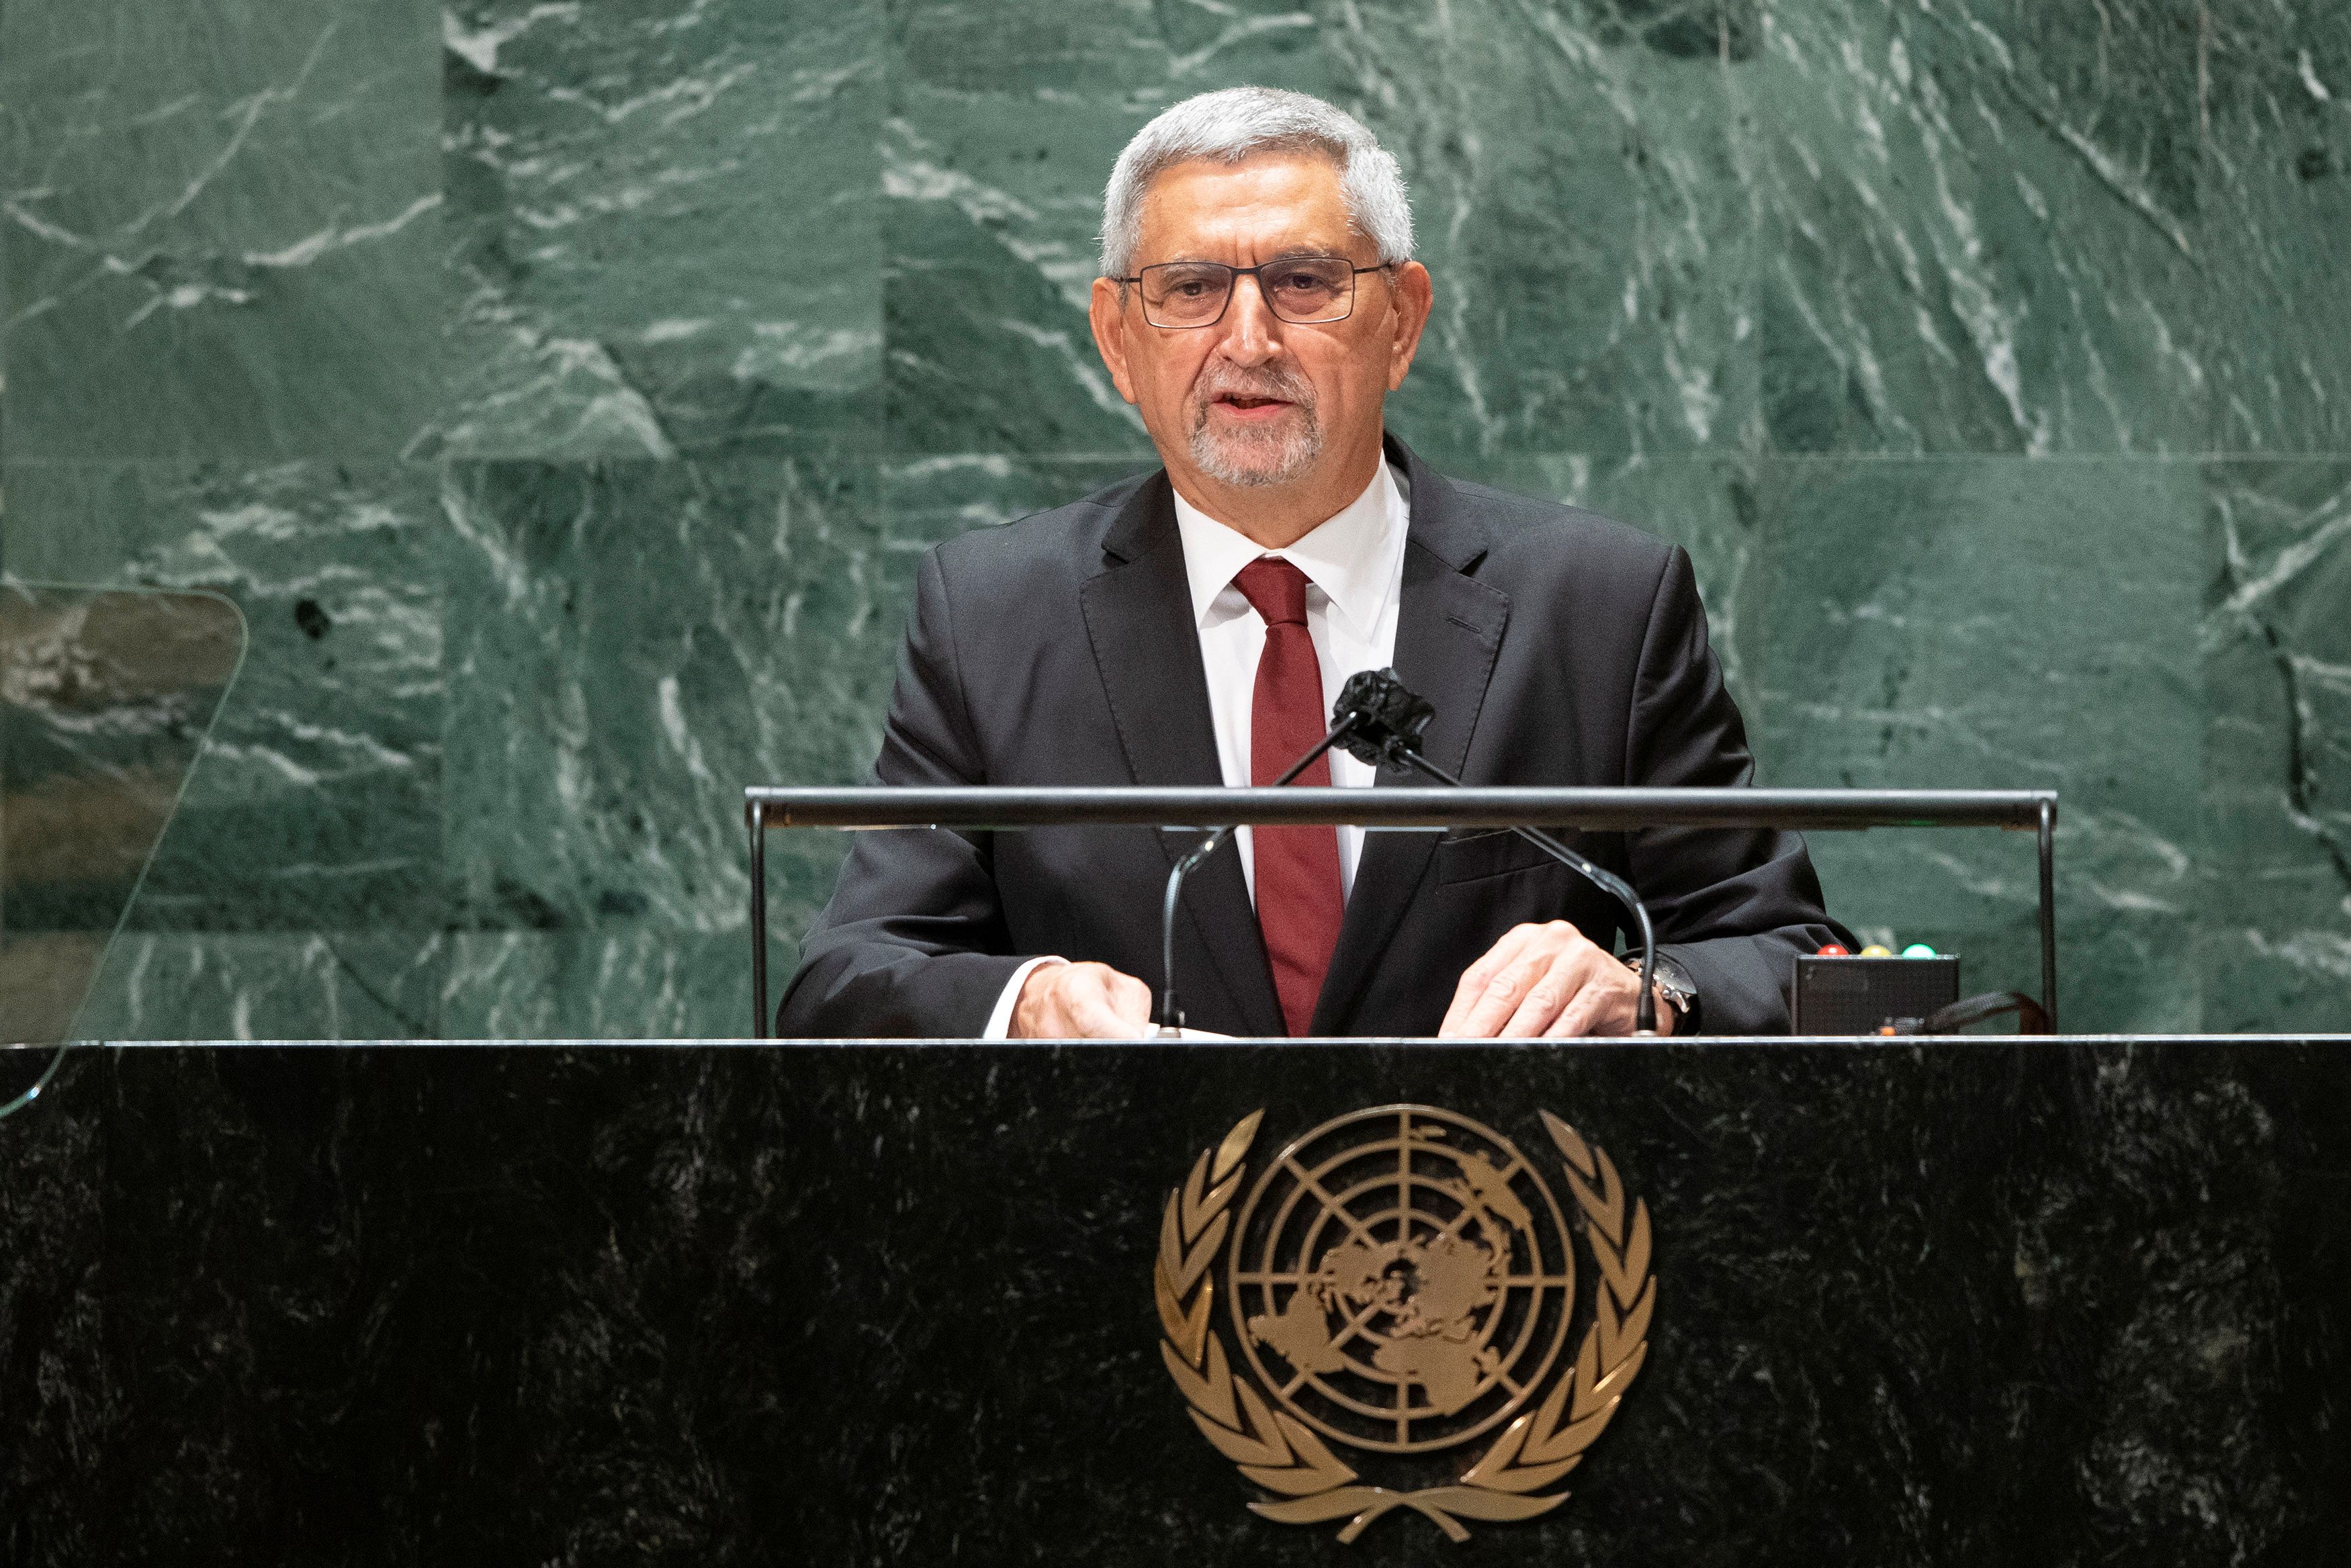 Cape Verde's President Jorge Carlos de Almeida Fonseca addresses the 76th Session of the U.N. General Assembly in New York City, U.S., September 22, 2021.  REUTERS/Eduardo Munoz